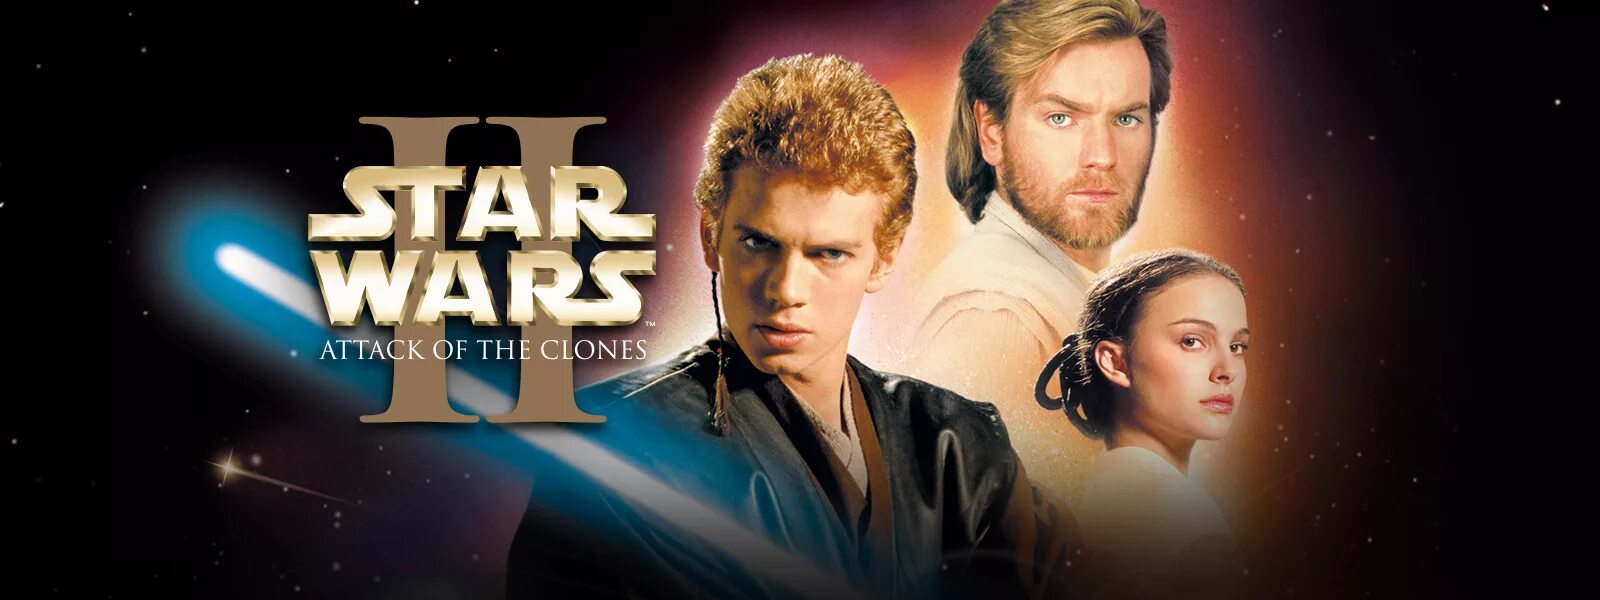 Звёздные войны: эпизод 2 — атака клонов (2002). Star Wars атака клонов 2002. Звёздные войны: эпизод 2 – атака клонов Роуз Бирн.